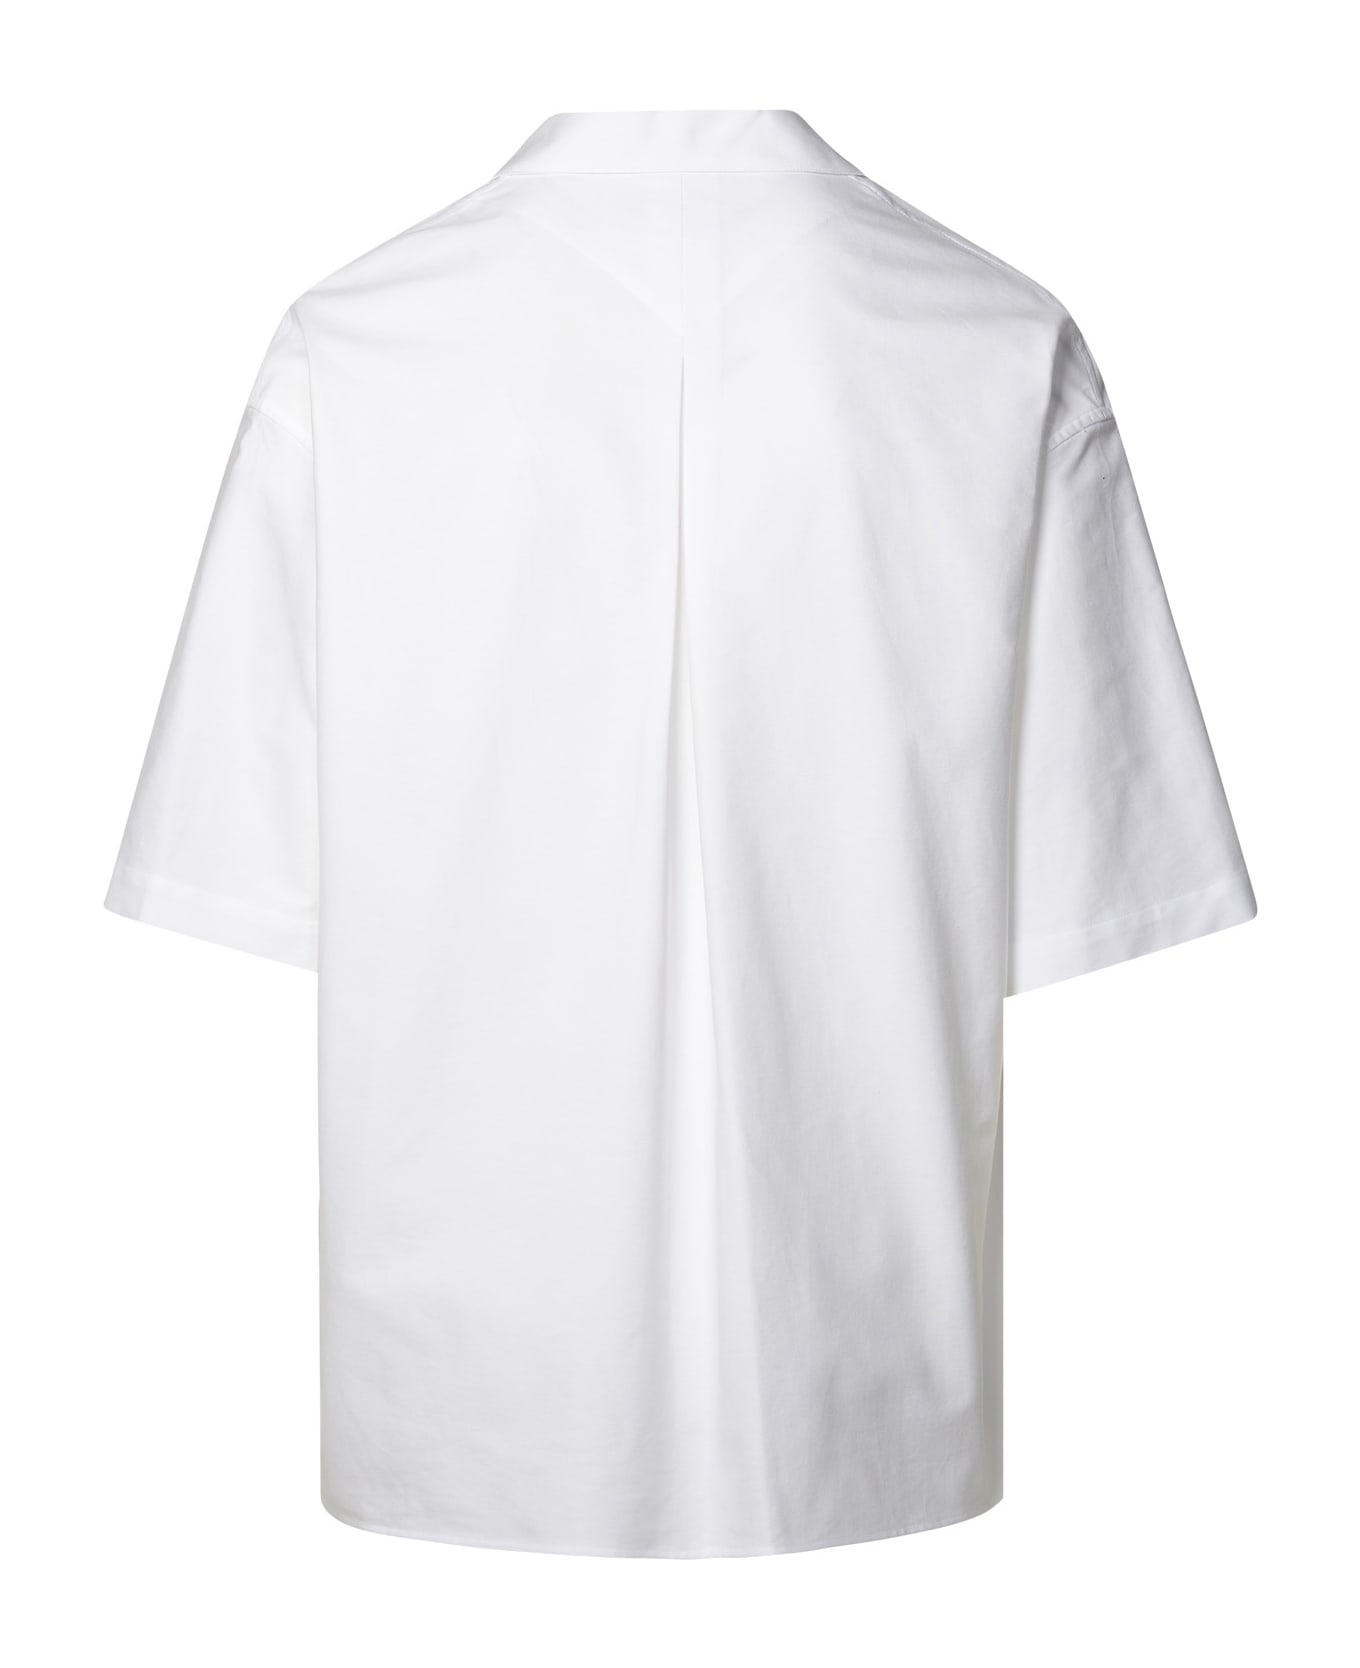 Kenzo White Cotton Shirt - white シャツ